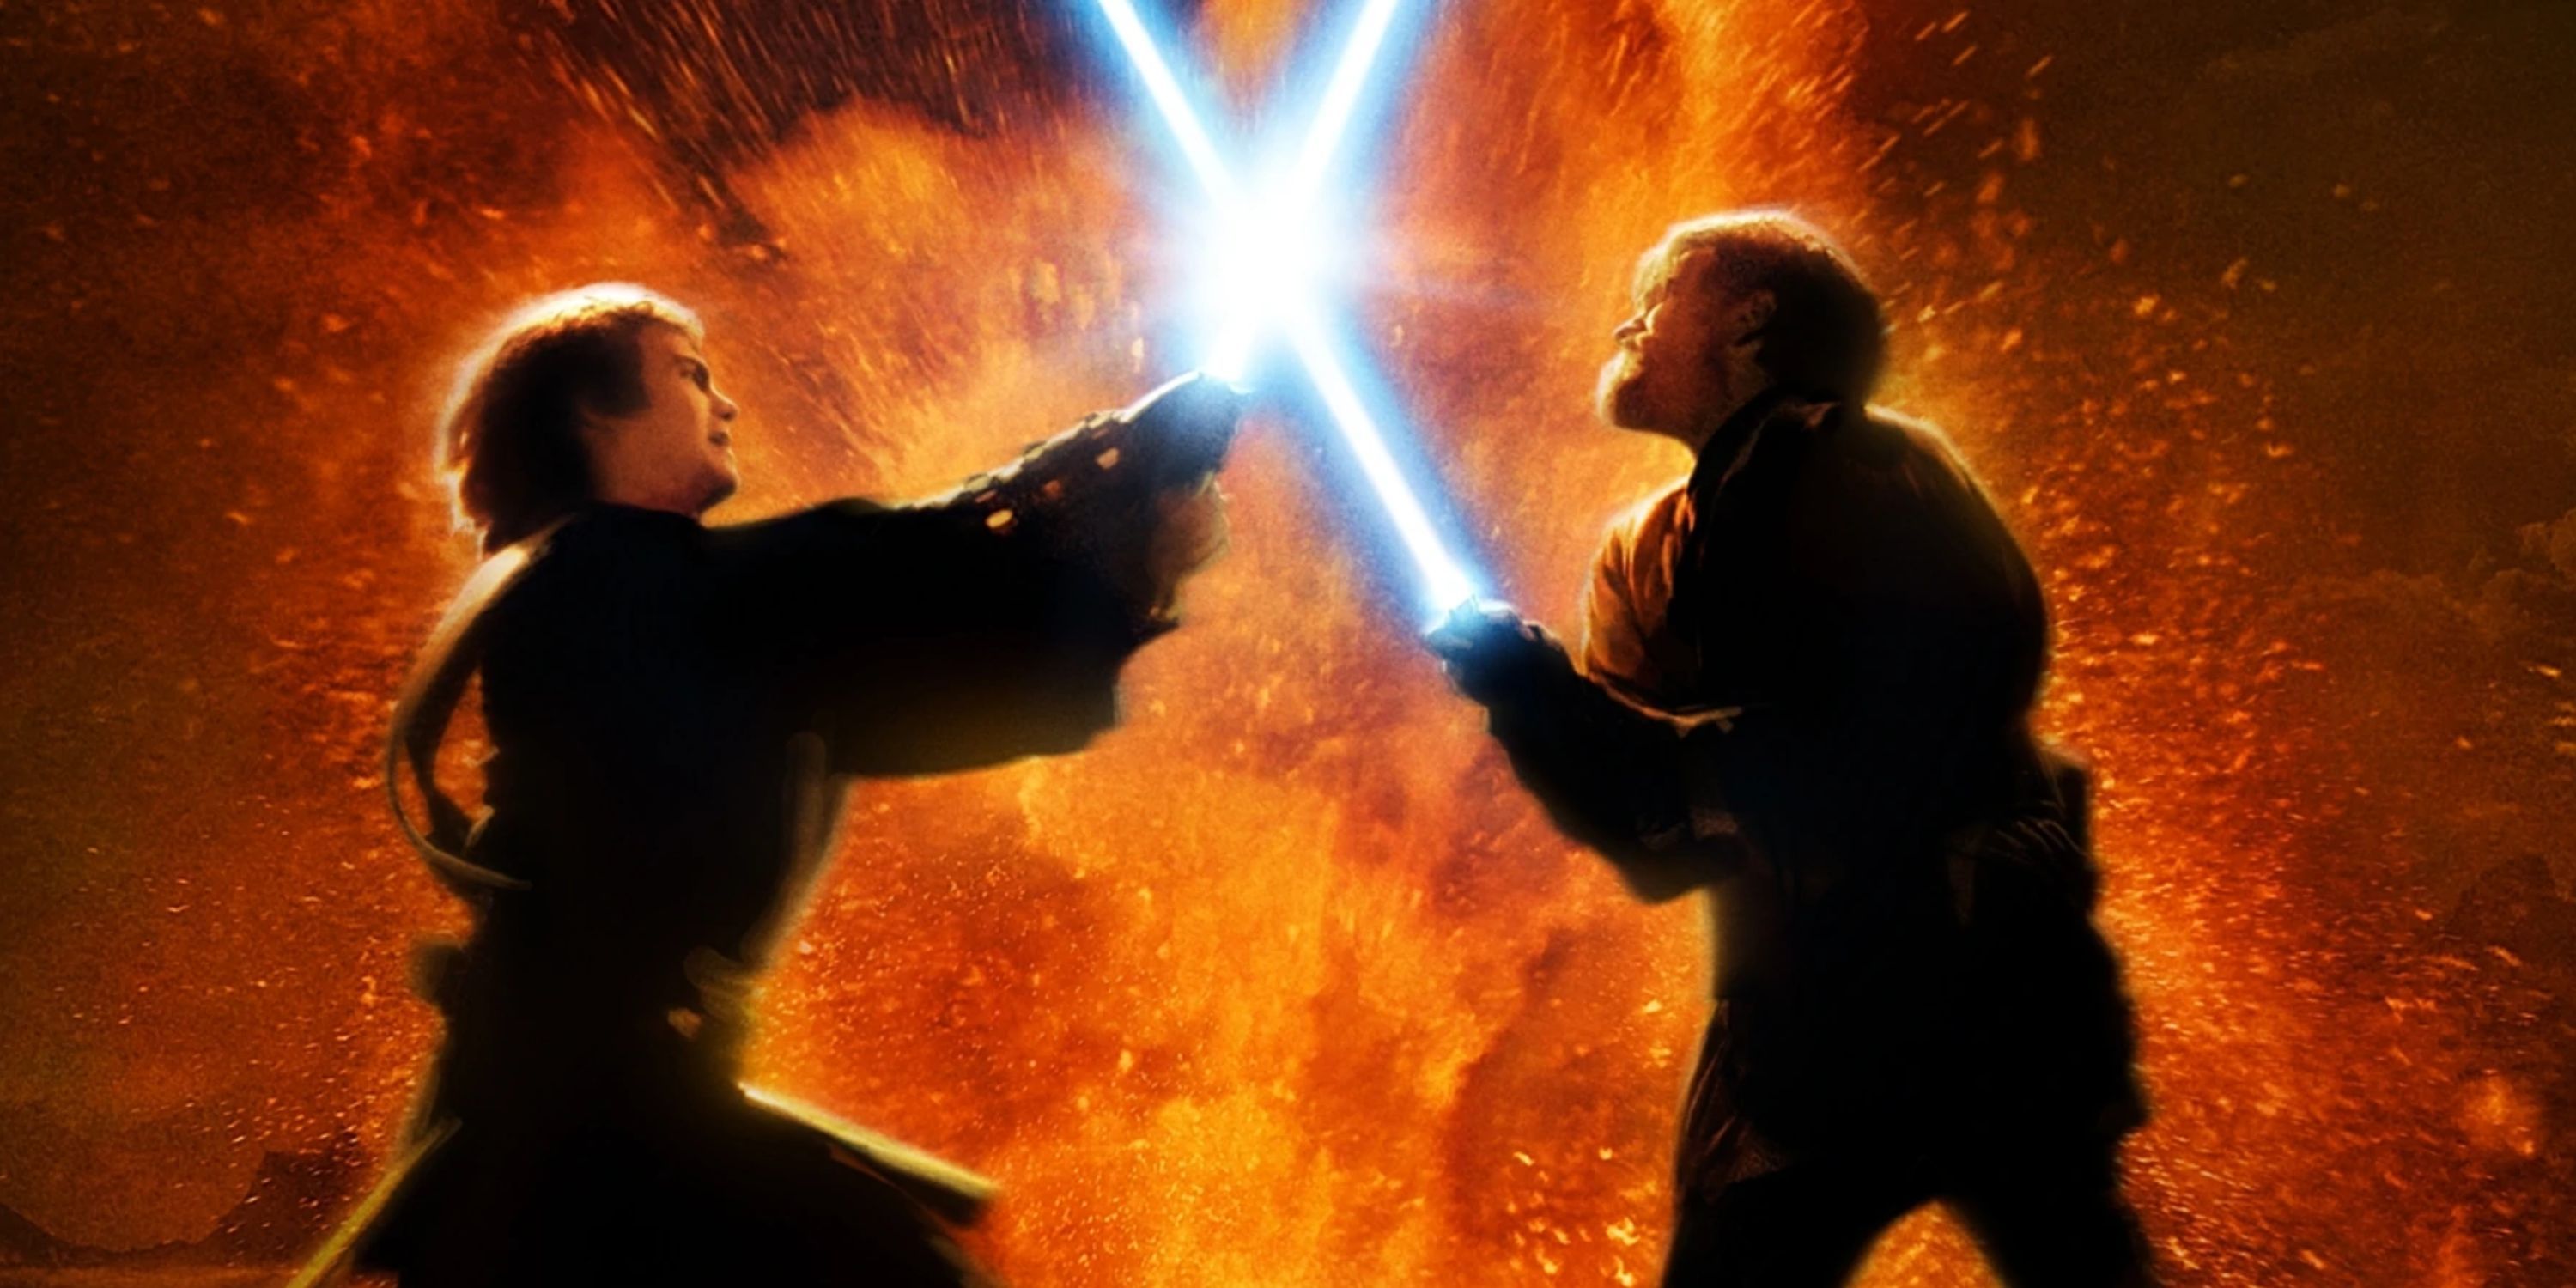 Revenge of the Sith Duel on Mustafar between Darth Vader and Obi-Wan Kenobi